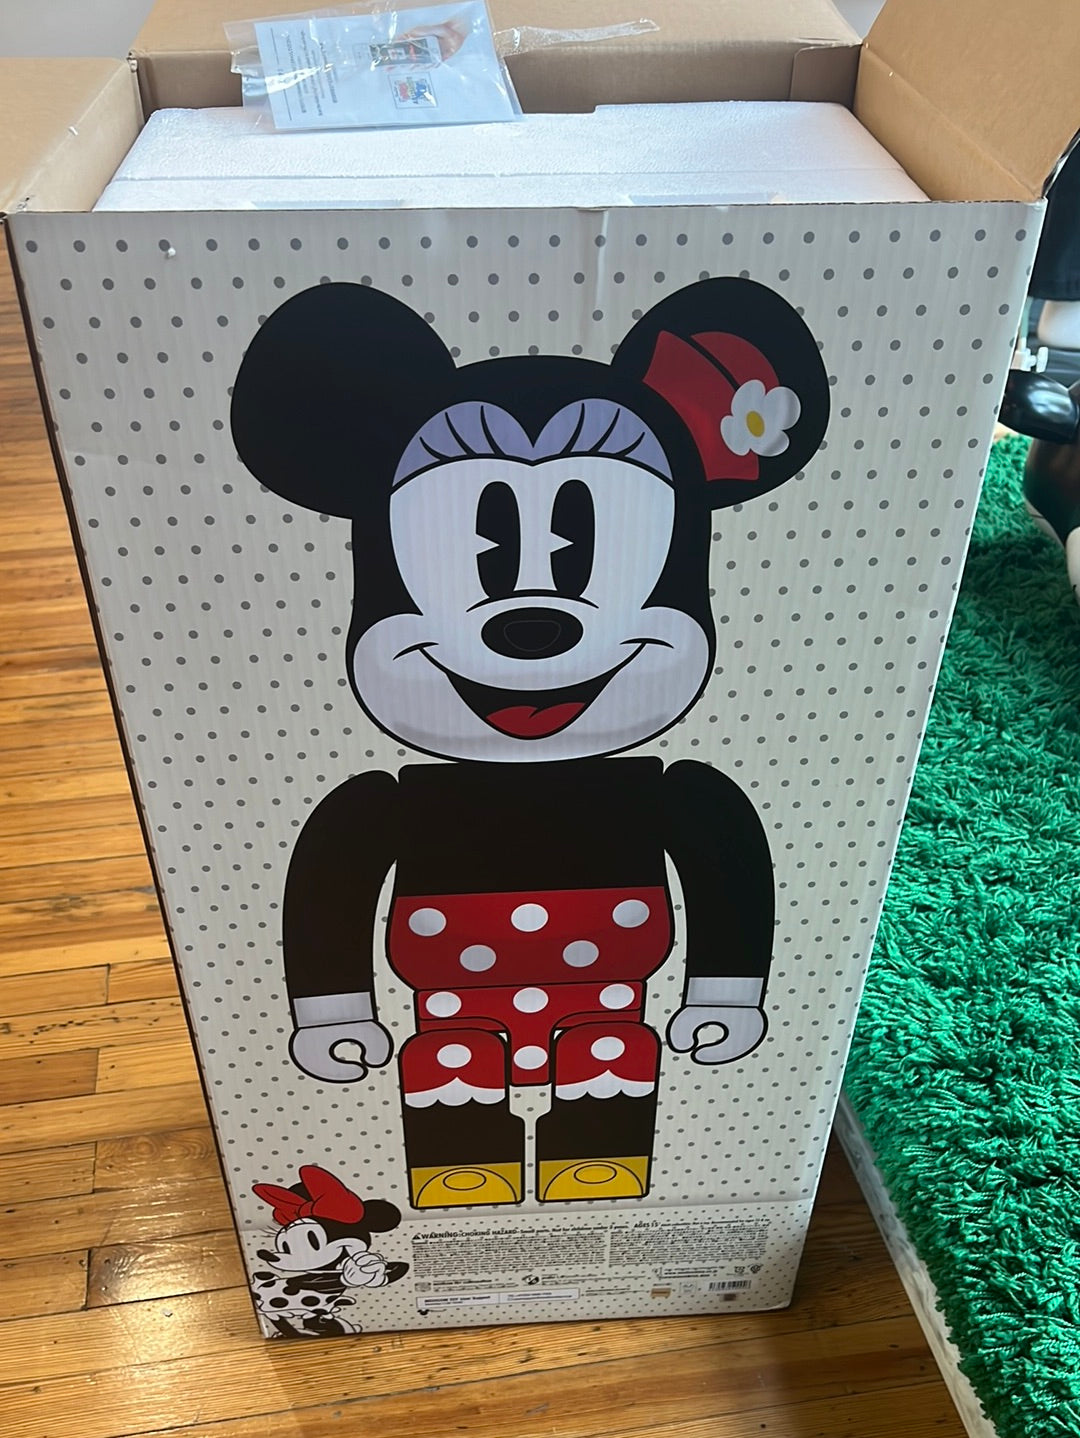 Bearbrick x Disney “Minnie Mouse” 1000%